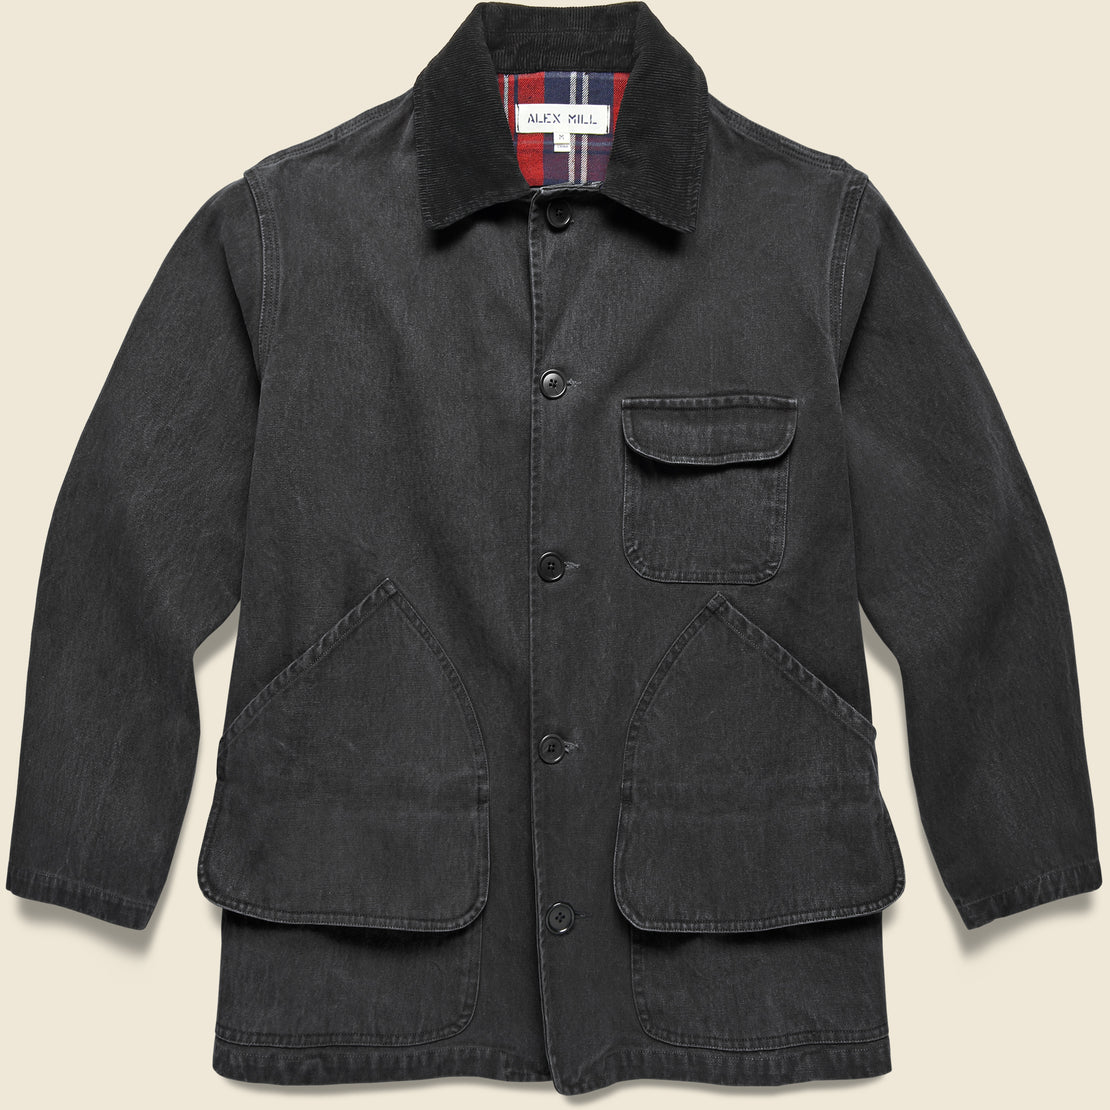 Alex Mill Frontier Jacket - Washed Black